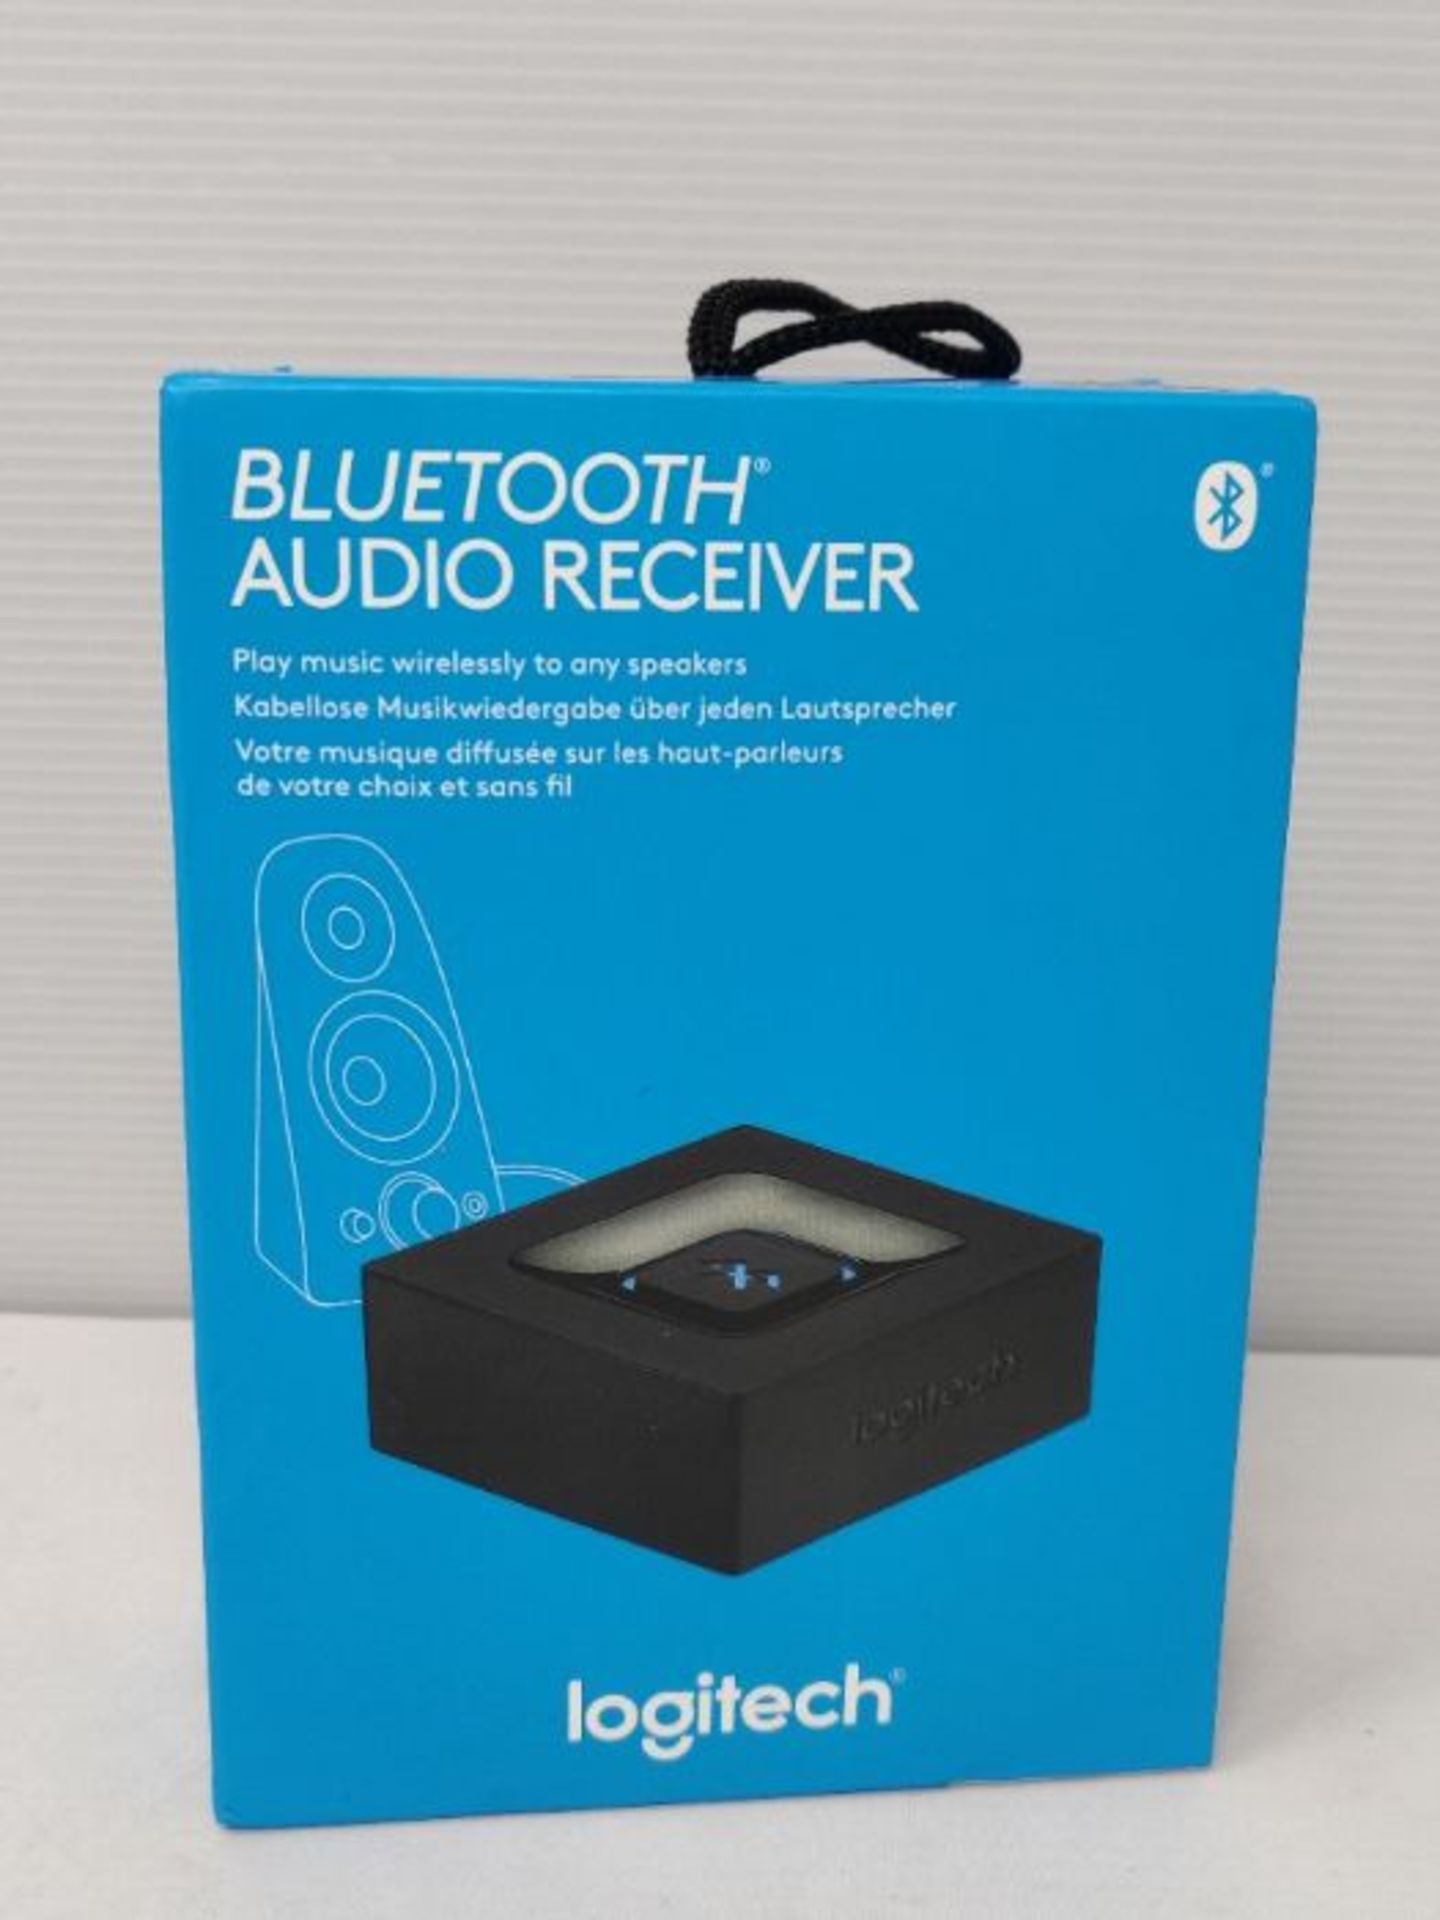 Logitech Wireless Bluetooth Audio Receiver, Bluetooth Adapter for PC/Mac/Smartphone/Ta - Image 2 of 3